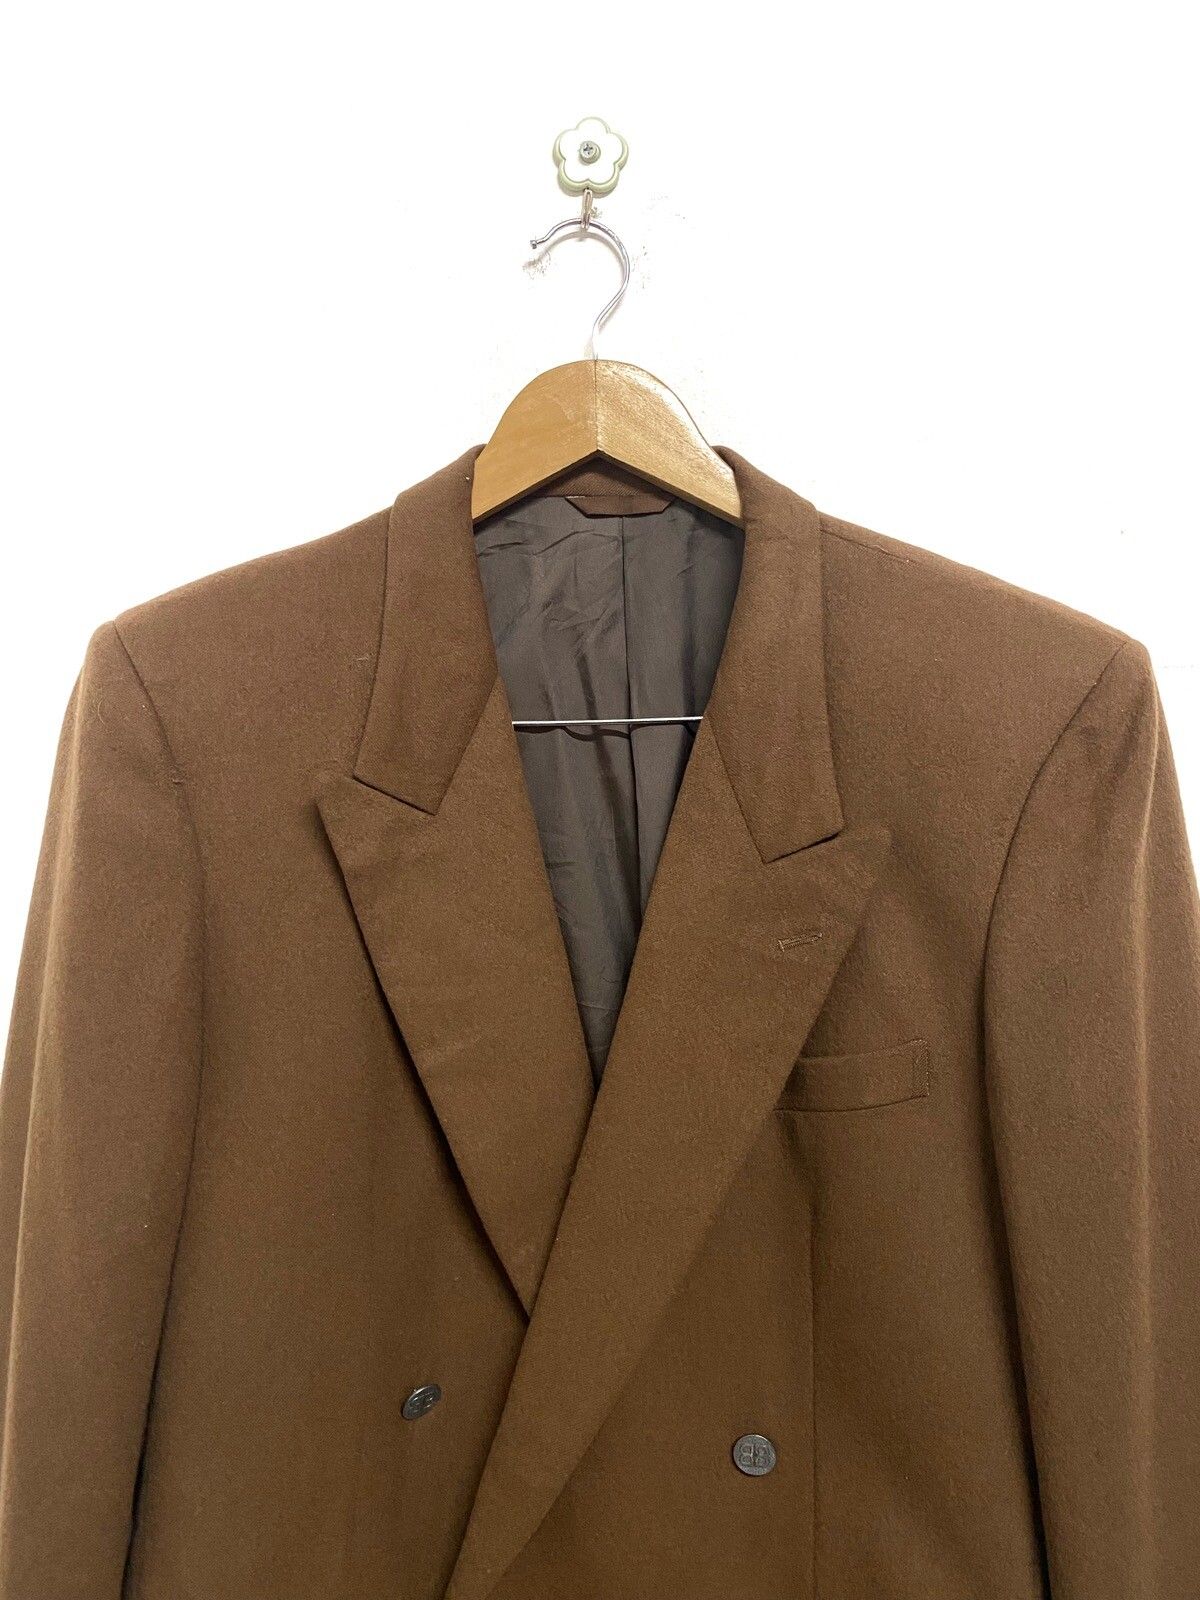 Vintage Balenciaga Cashmere Blazer Suit Jacket - 2